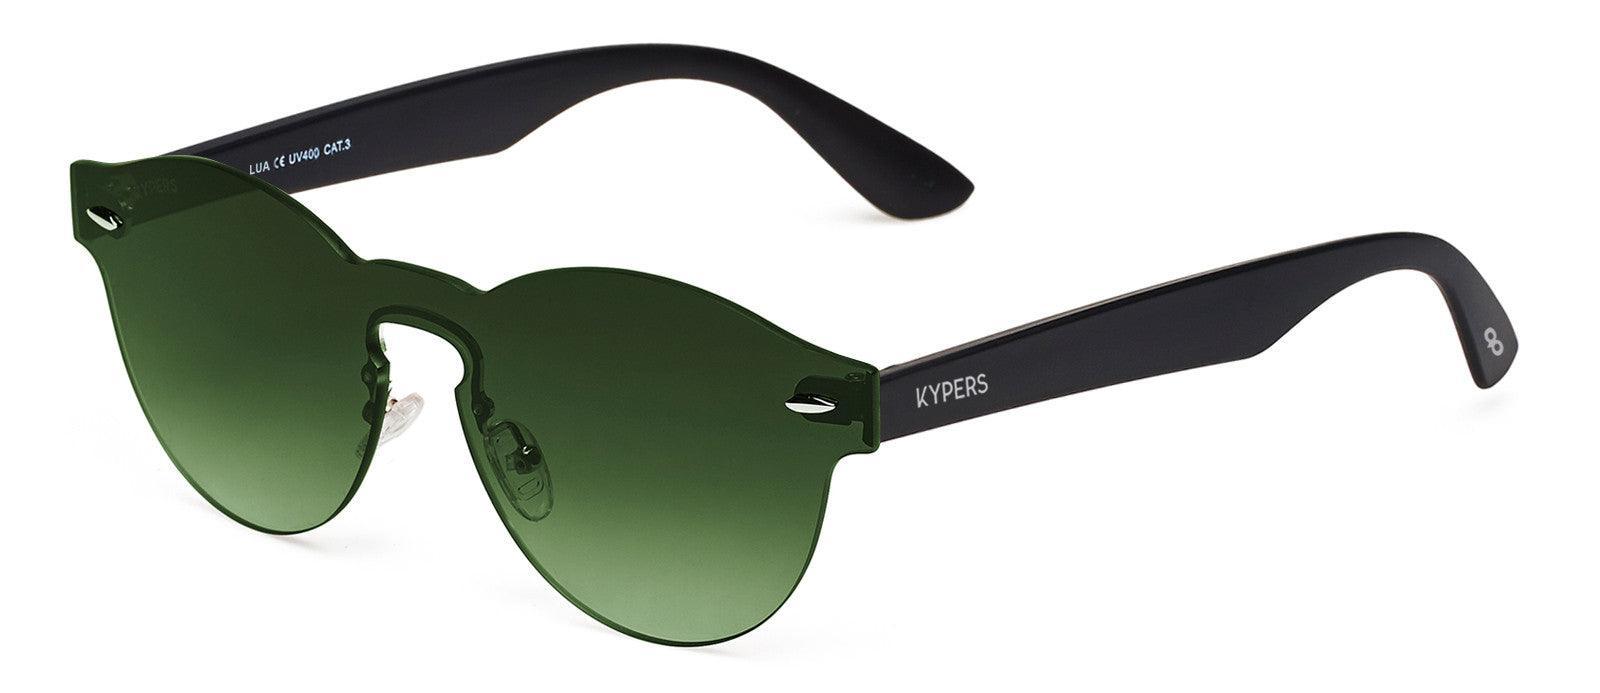 KYPERS sunglasses model LUA LU006 with black frame and dark gold mirror lens